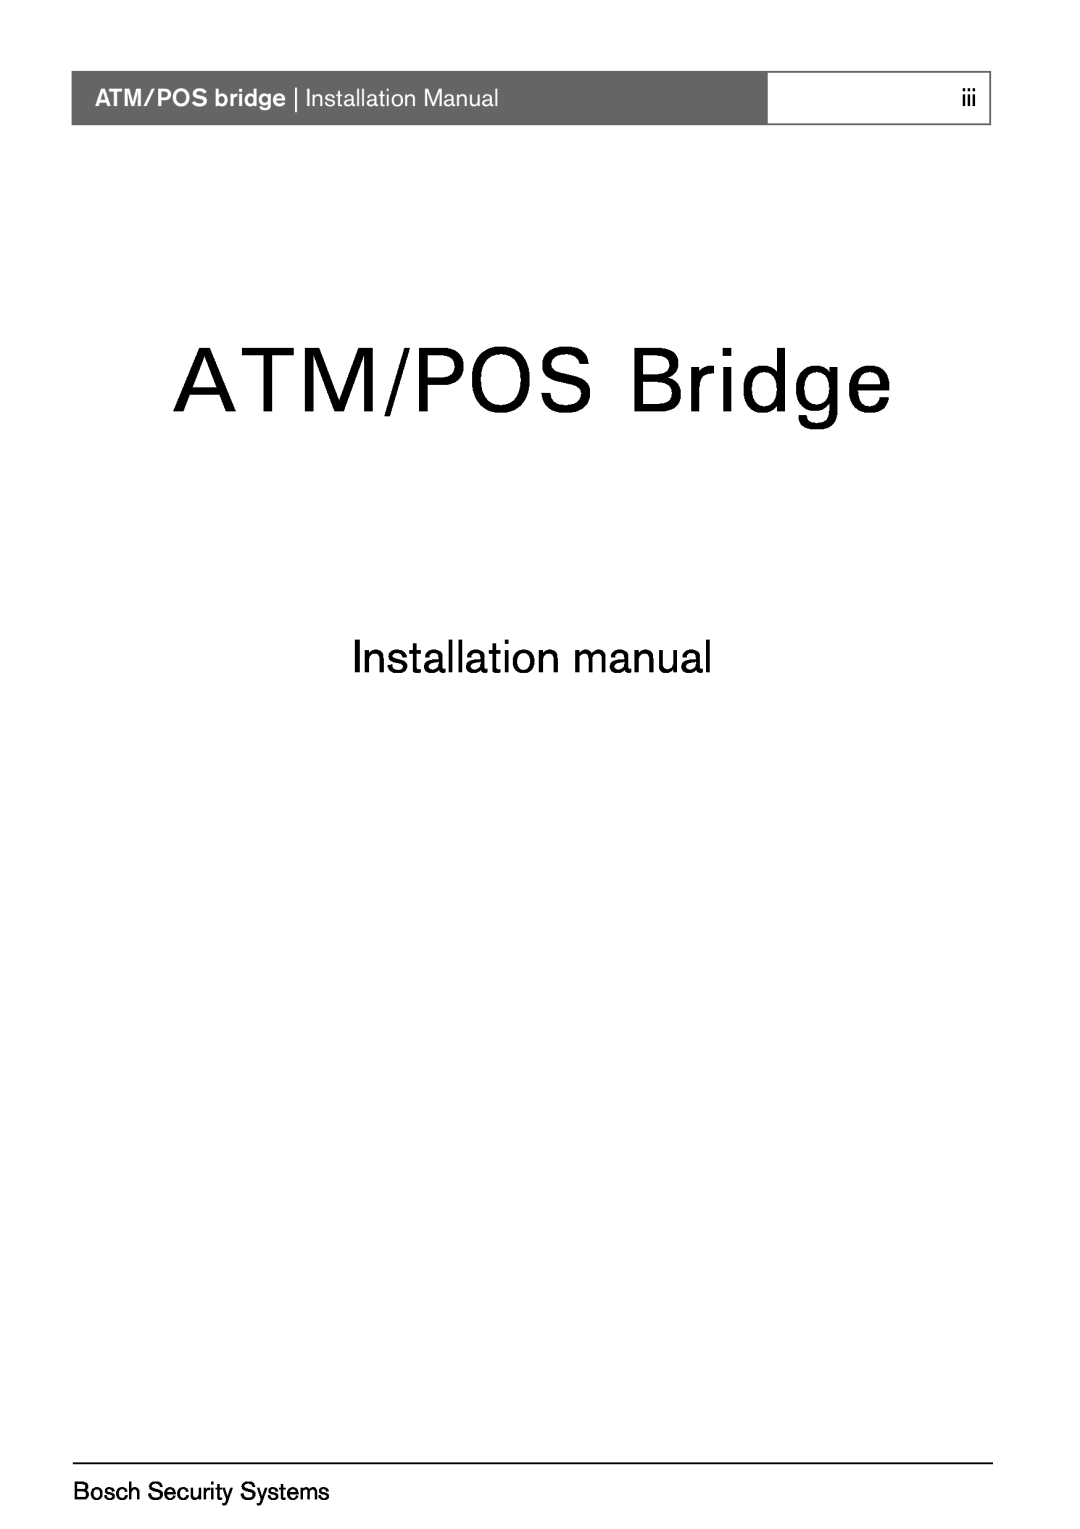 Bosch Appliances ATM/POS Bridge Installation manual, ATM/POS bridge Installation Manual, Bosch Security Systems 